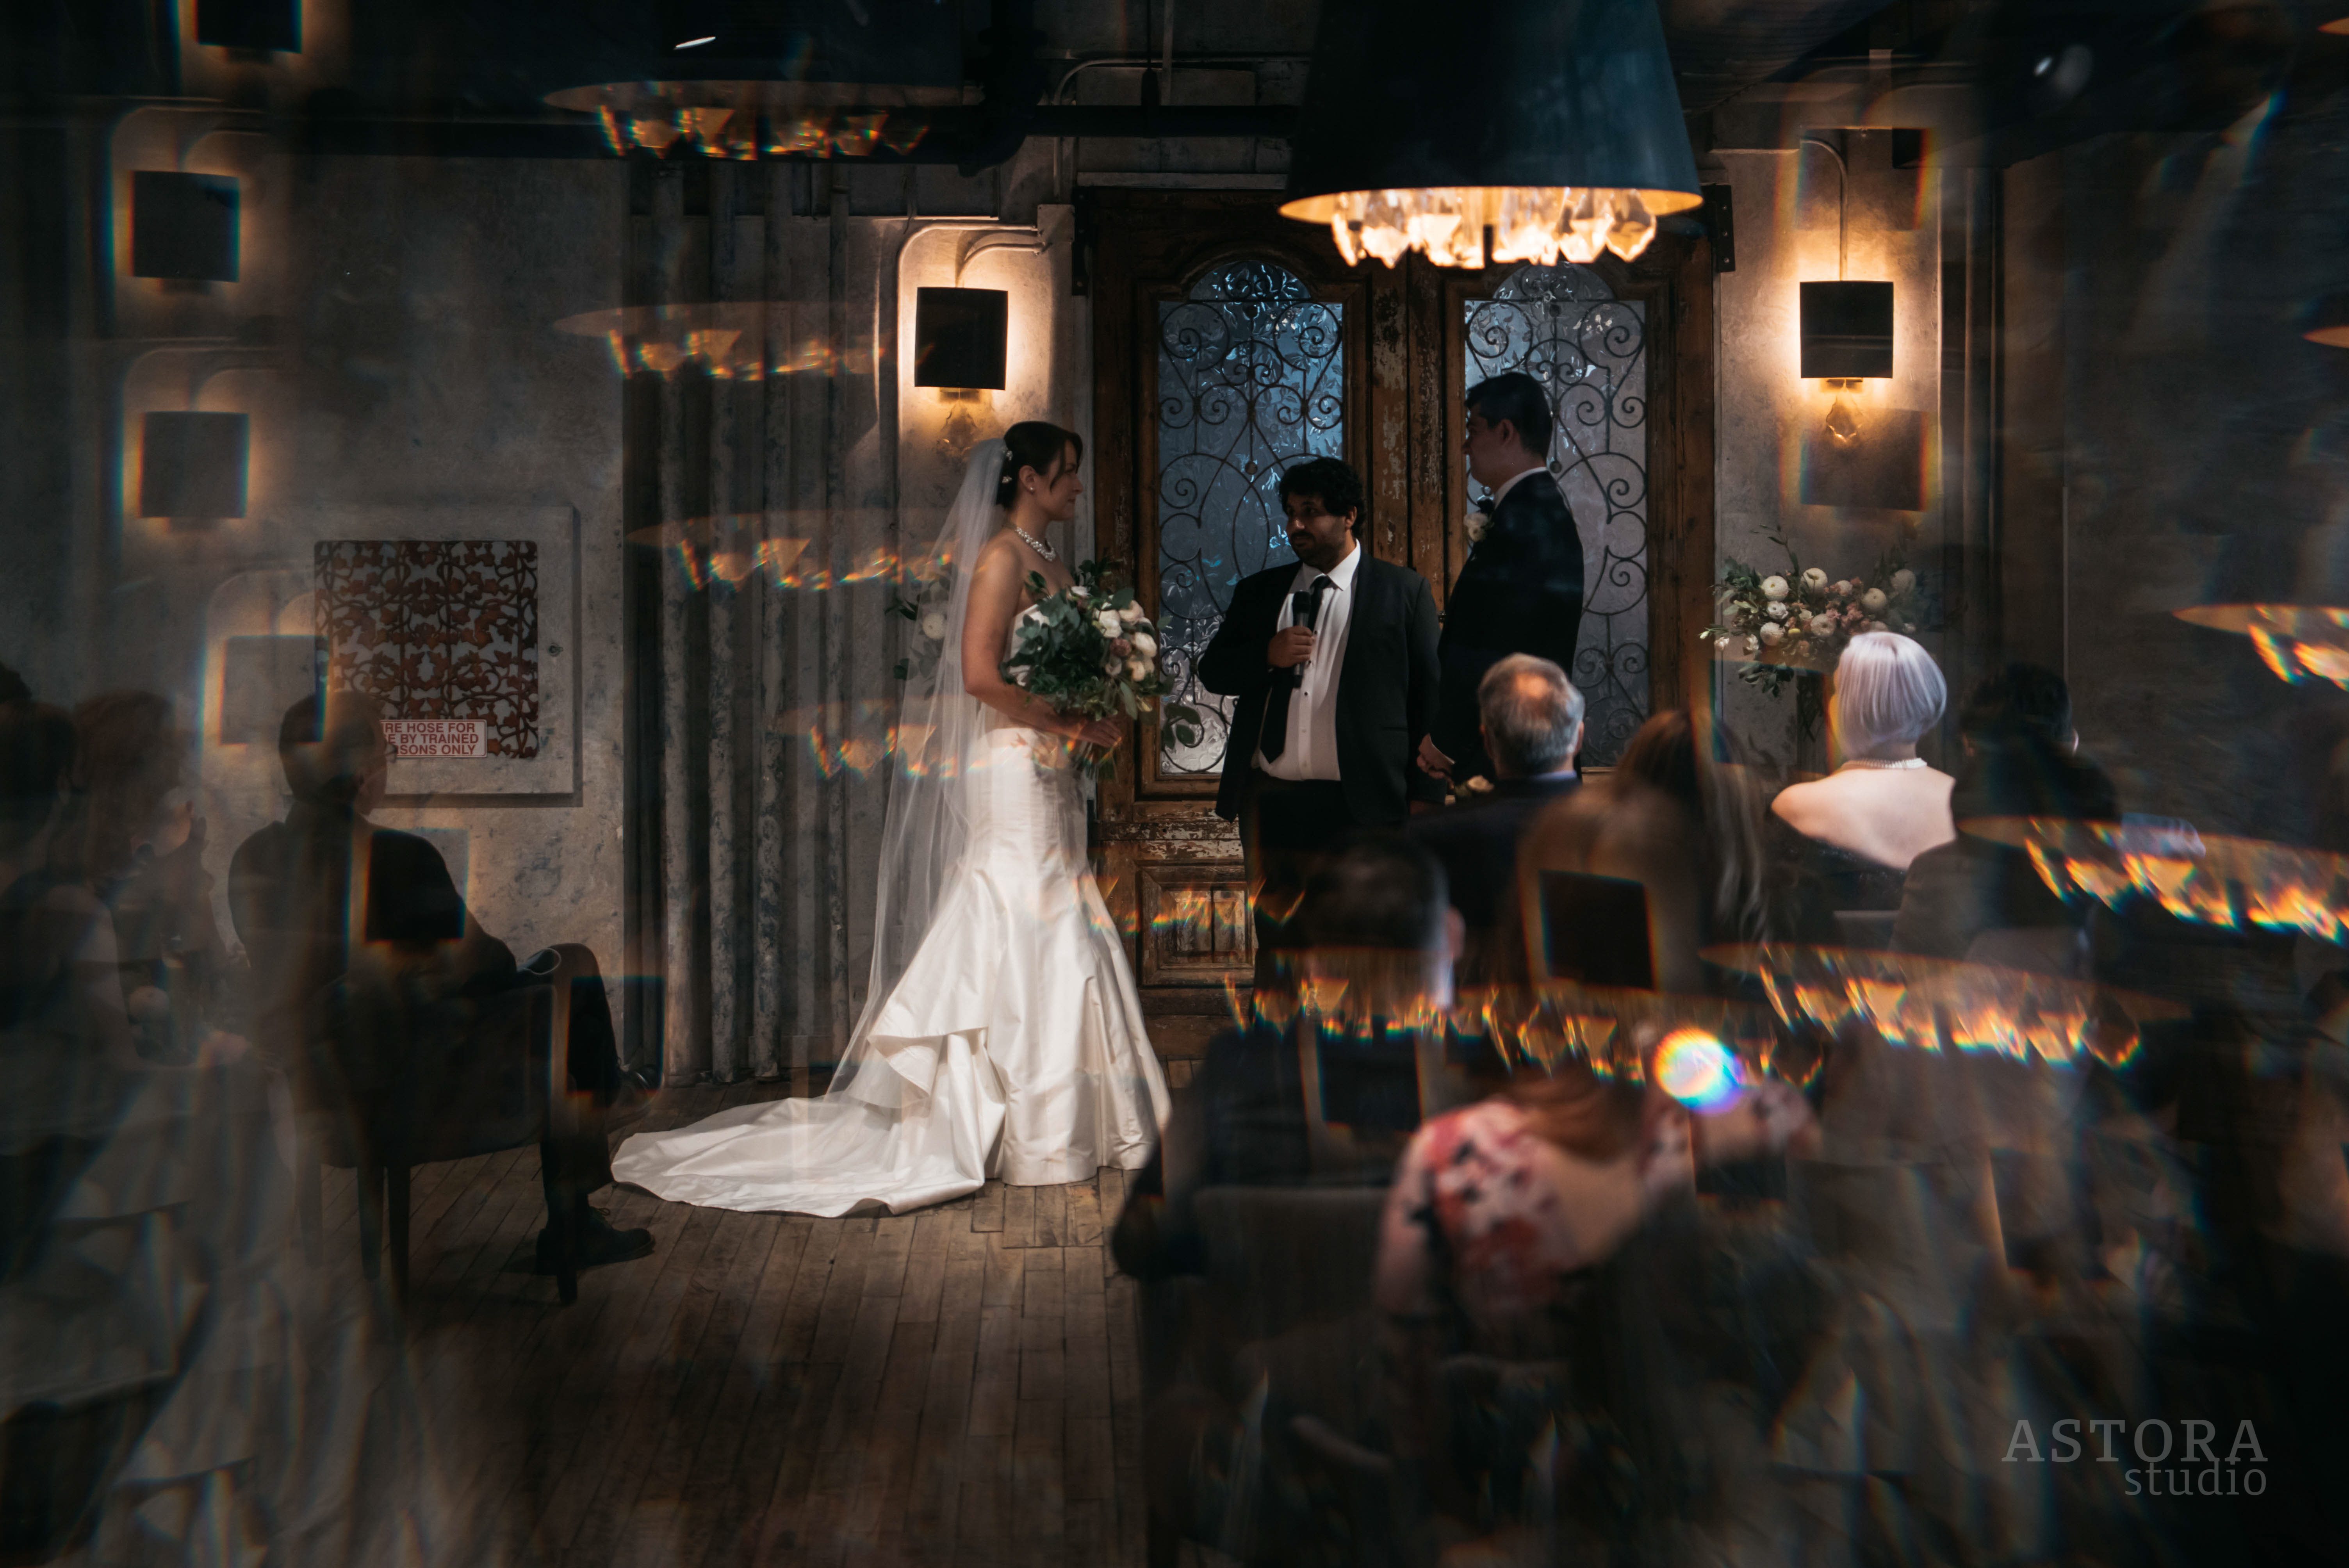 George Restaurant image for a bride